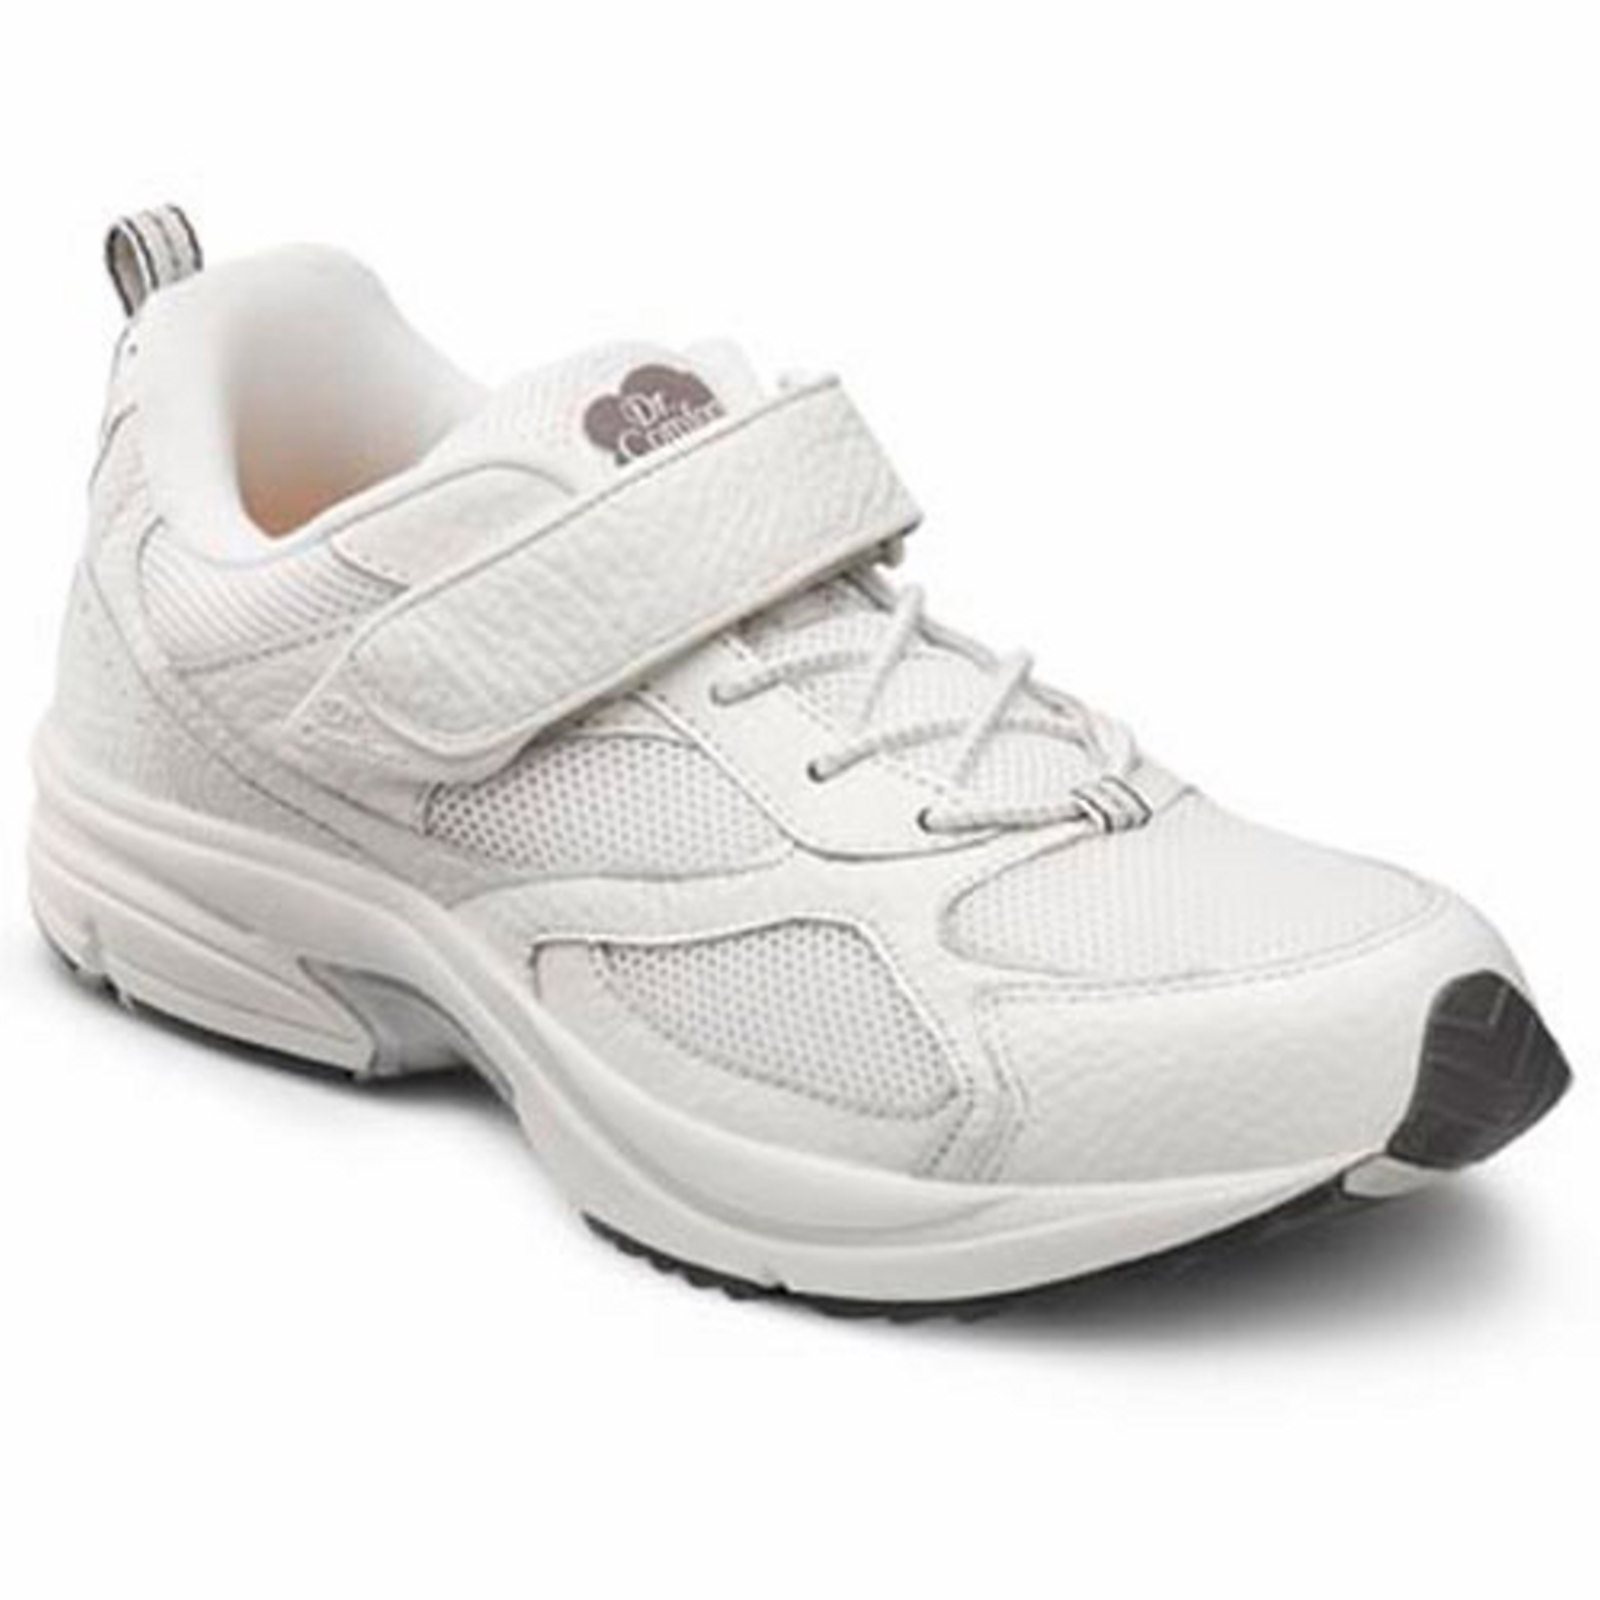 Dr. Comfort Endurance Men's Athletic Shoe: 10.5 Medium (B/D) White Elastic Lace w/Strap - image 1 of 4